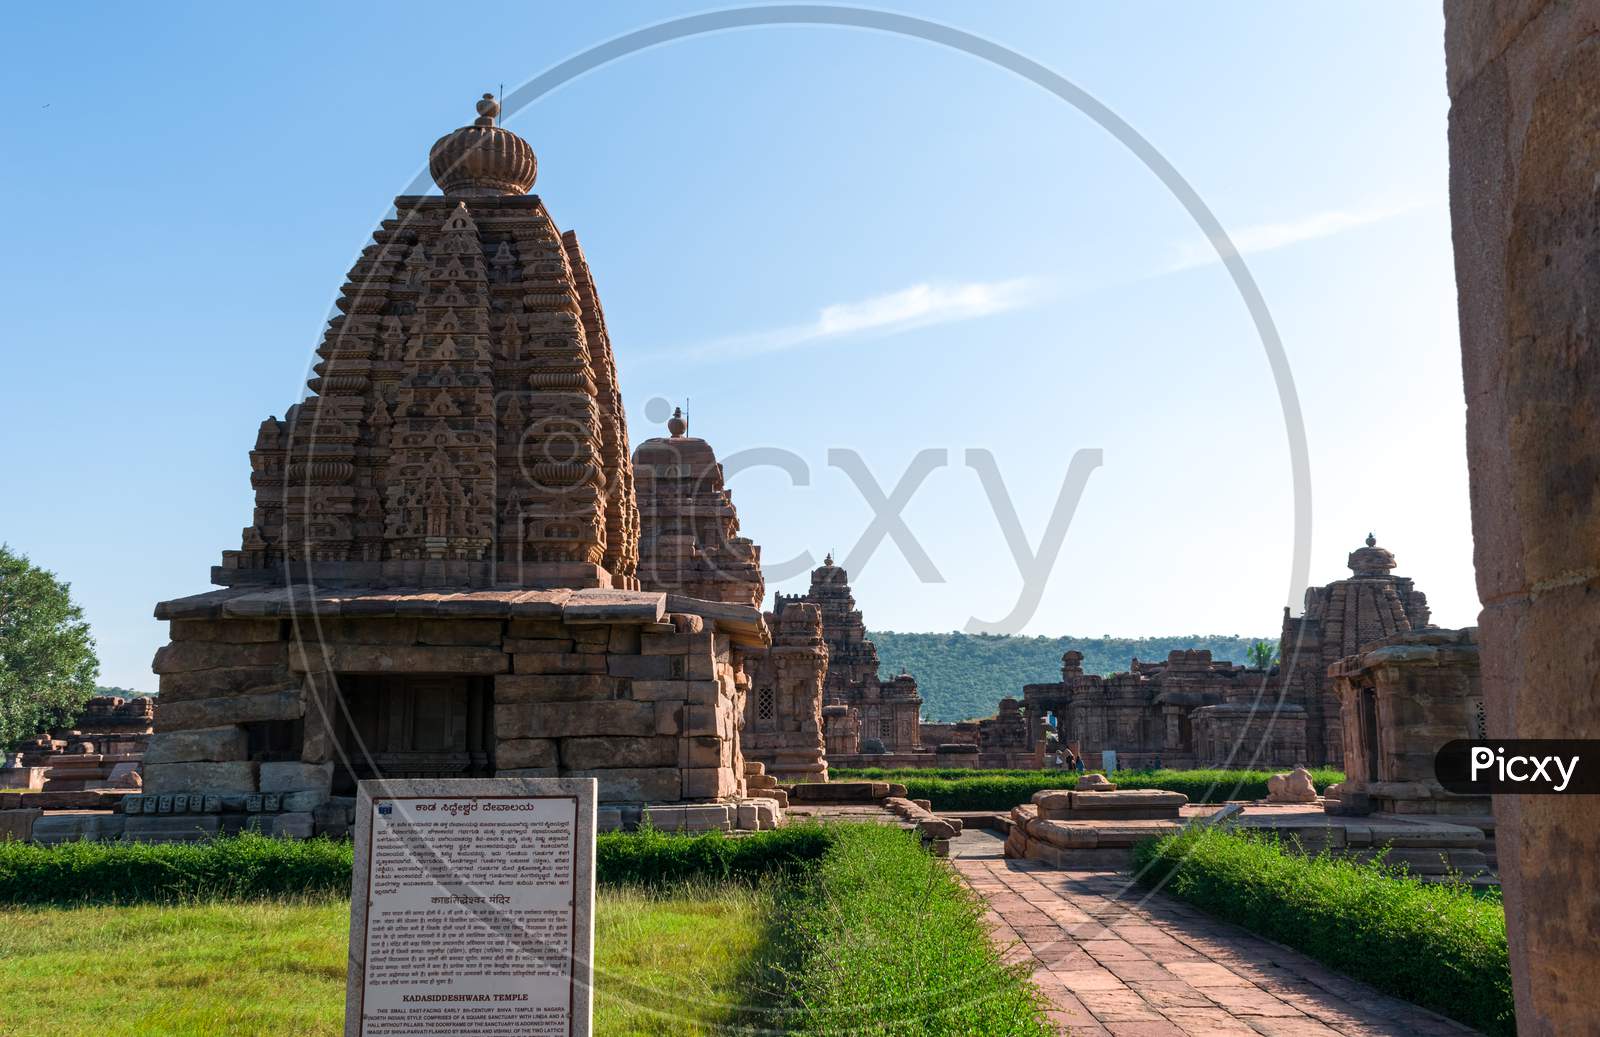 Temple complex of Pattadakal, karnataka,India